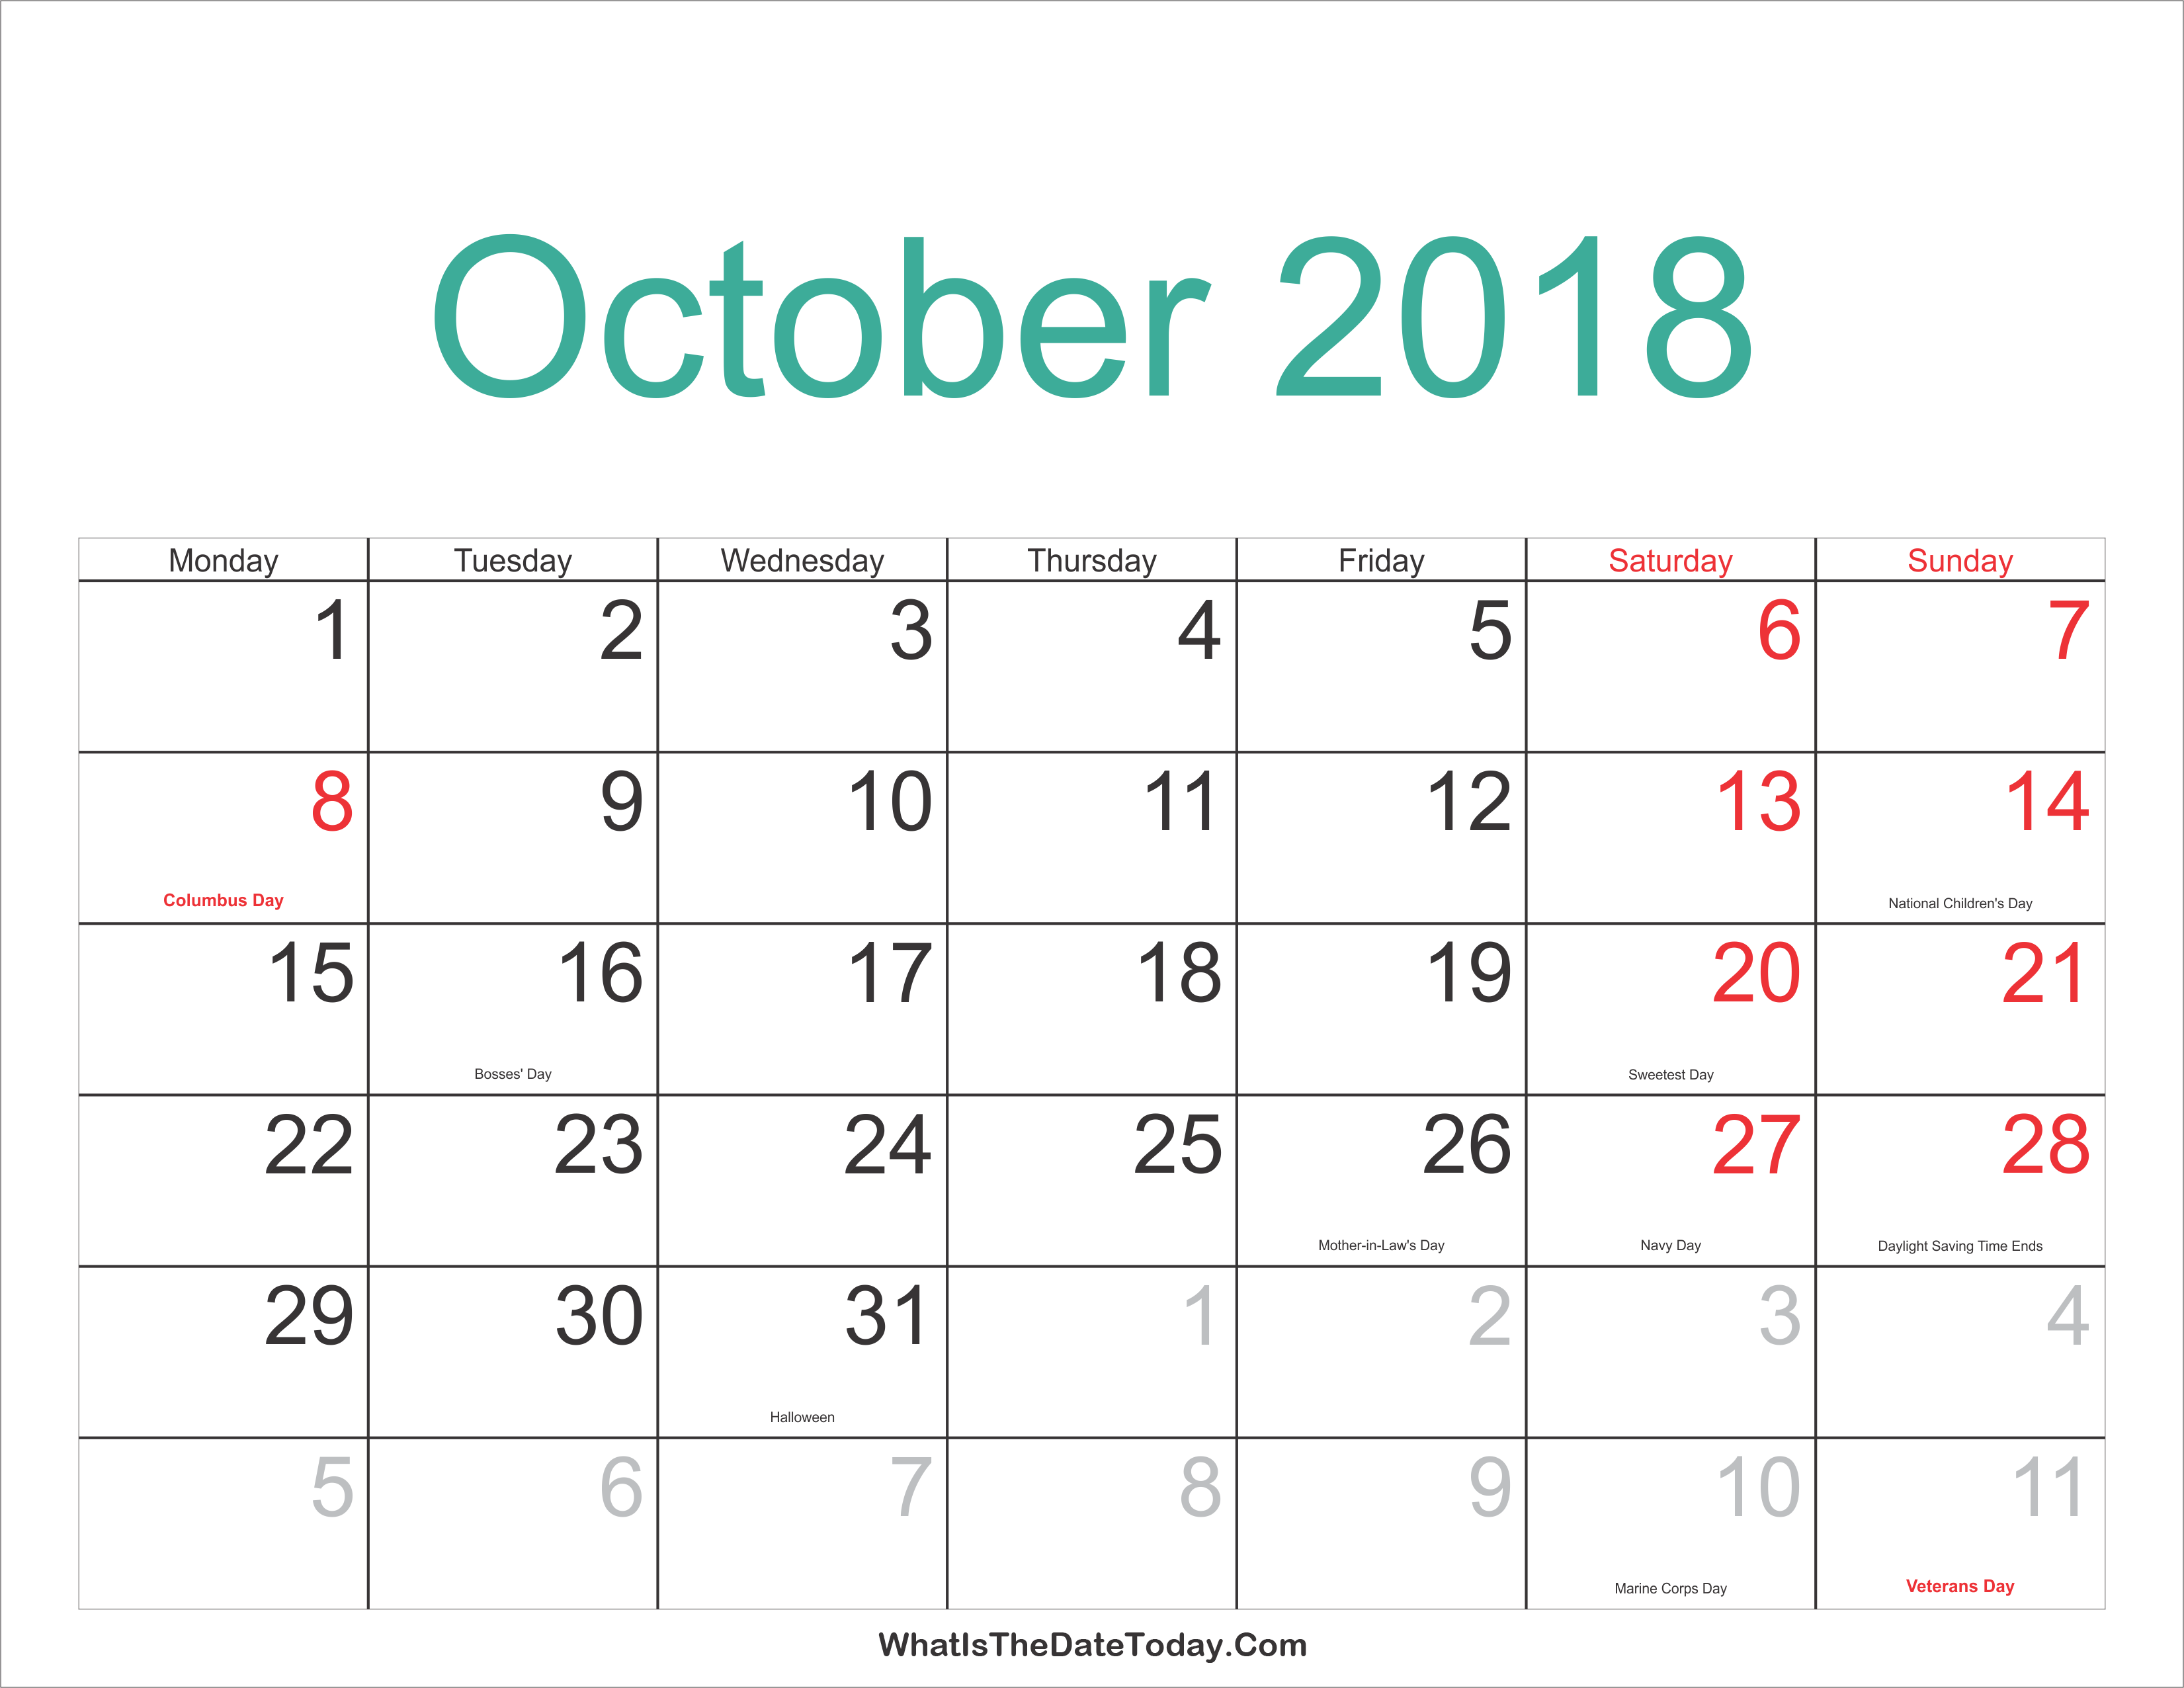 October 2018 Calendar Printable with Holidays